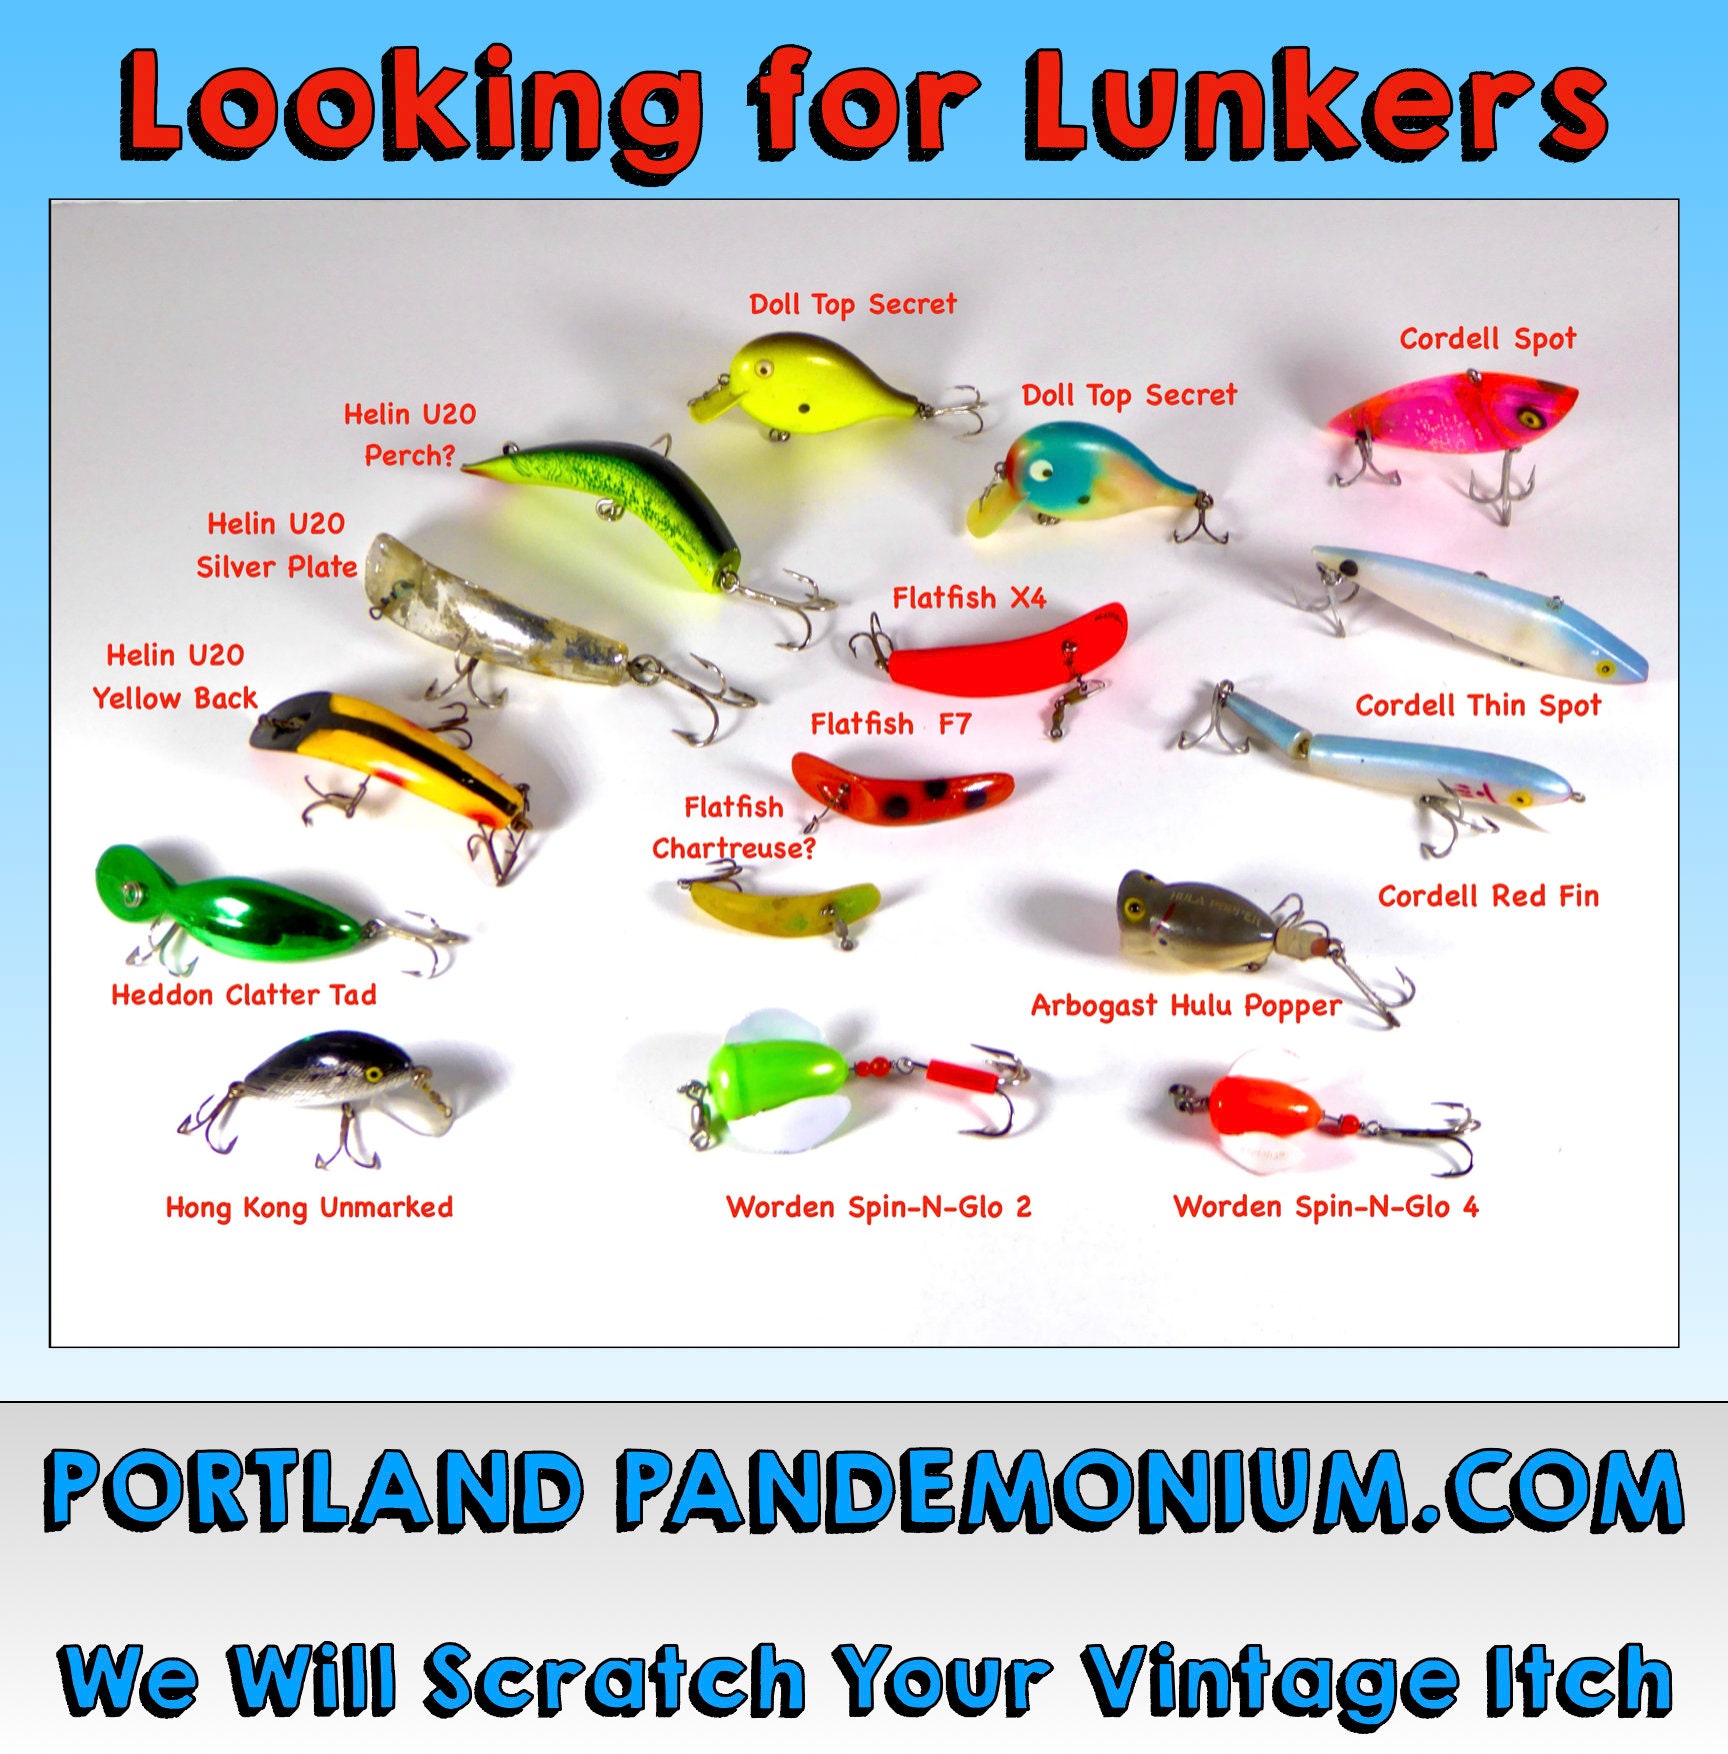 Rare Helin Wood Flatfish T61 Musky, Northern Pike Salmon Lure